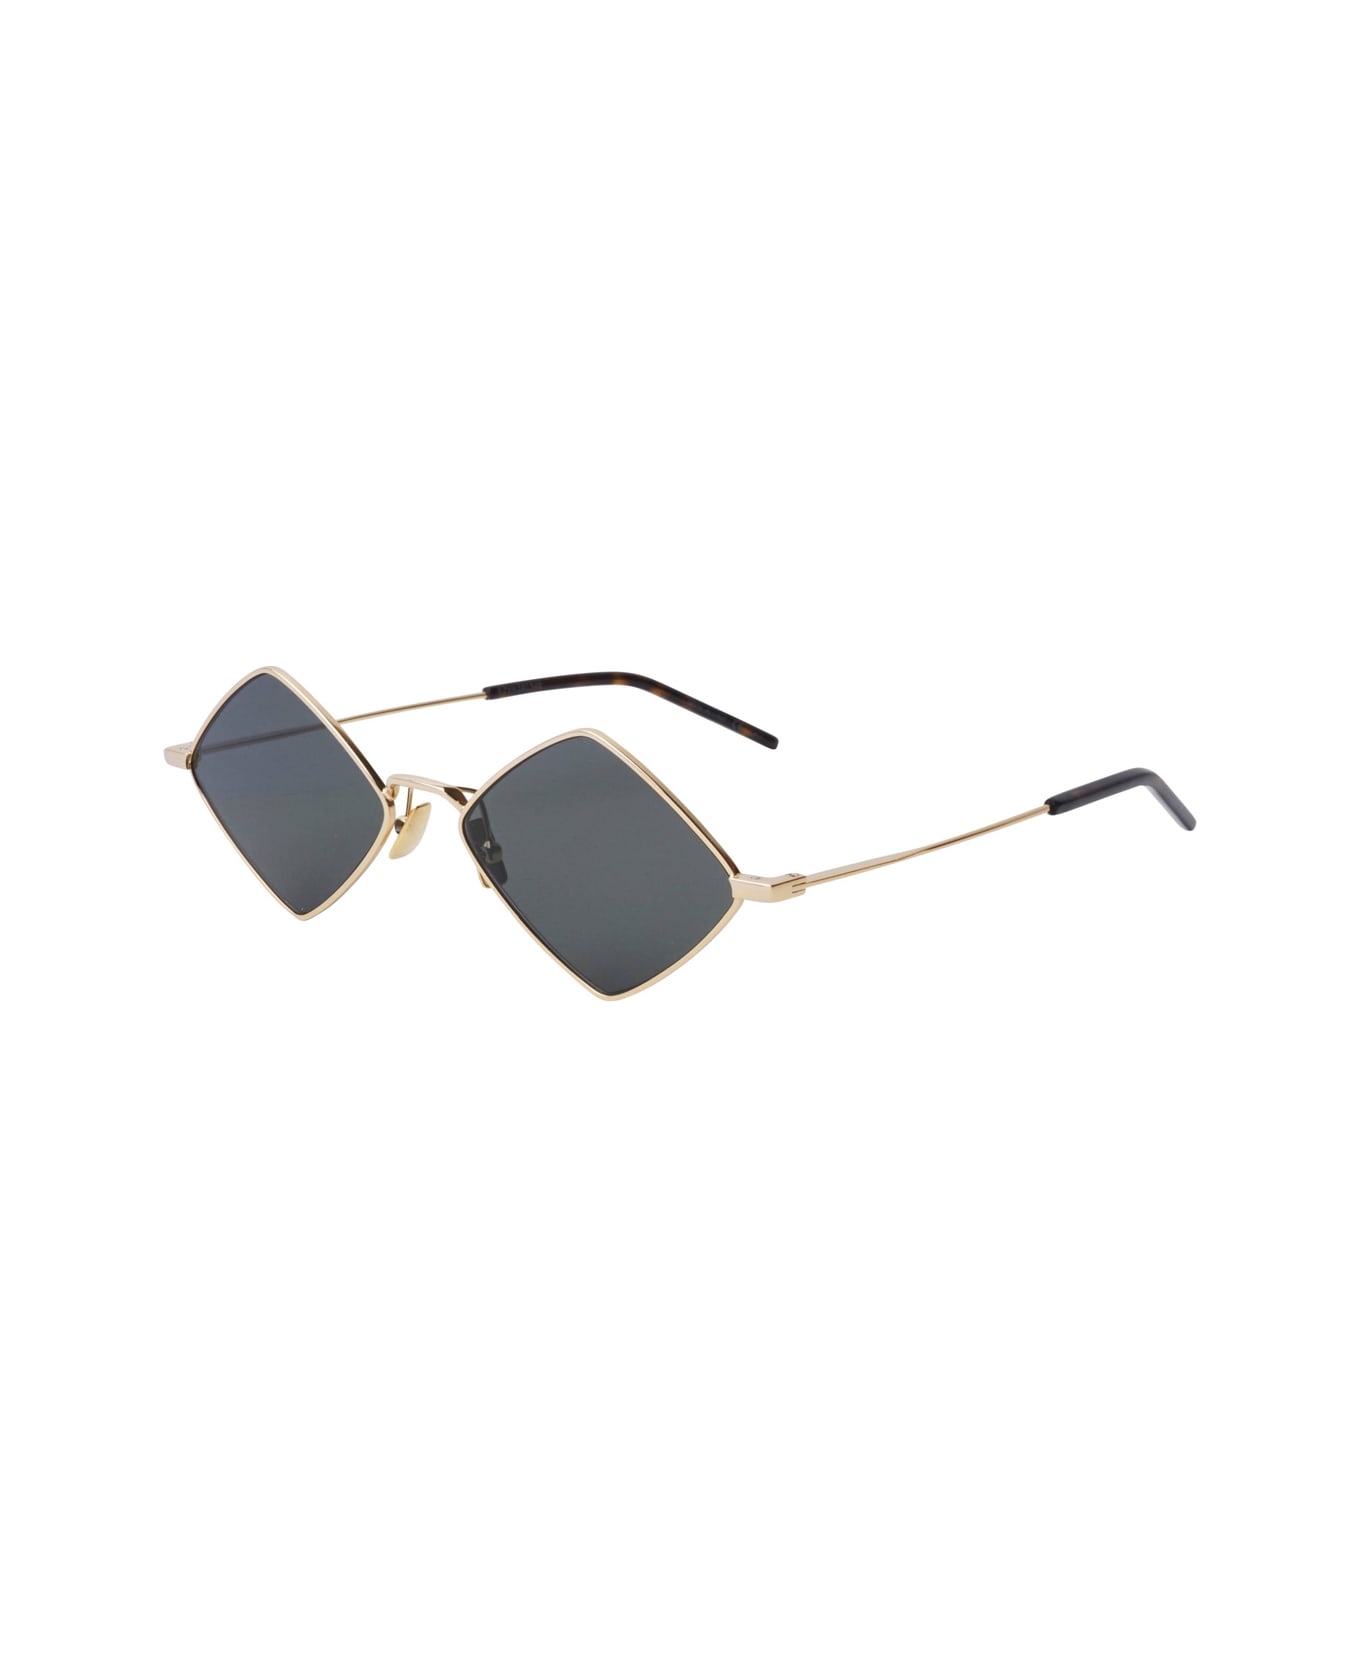 Saint Laurent Eyewear Sl 302 Lisa 004 Evzero Sunglasses - Oro